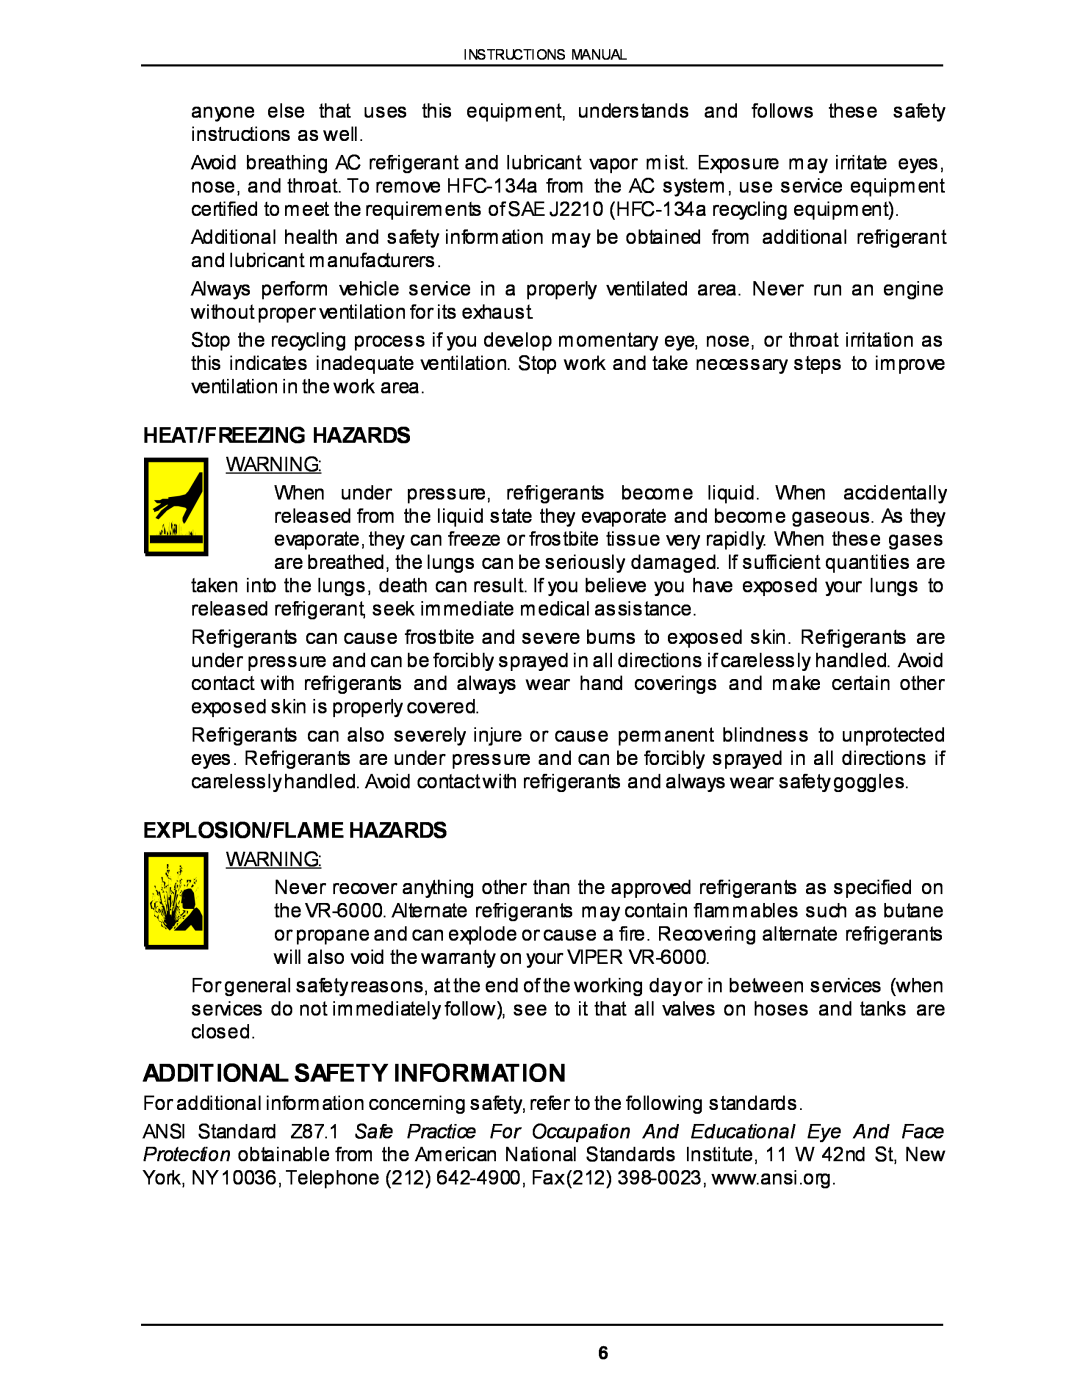 Viper VR-6000 owner manual Additional Safety Information, Heat/Freezing Hazards, Explosion/Flame Hazards 